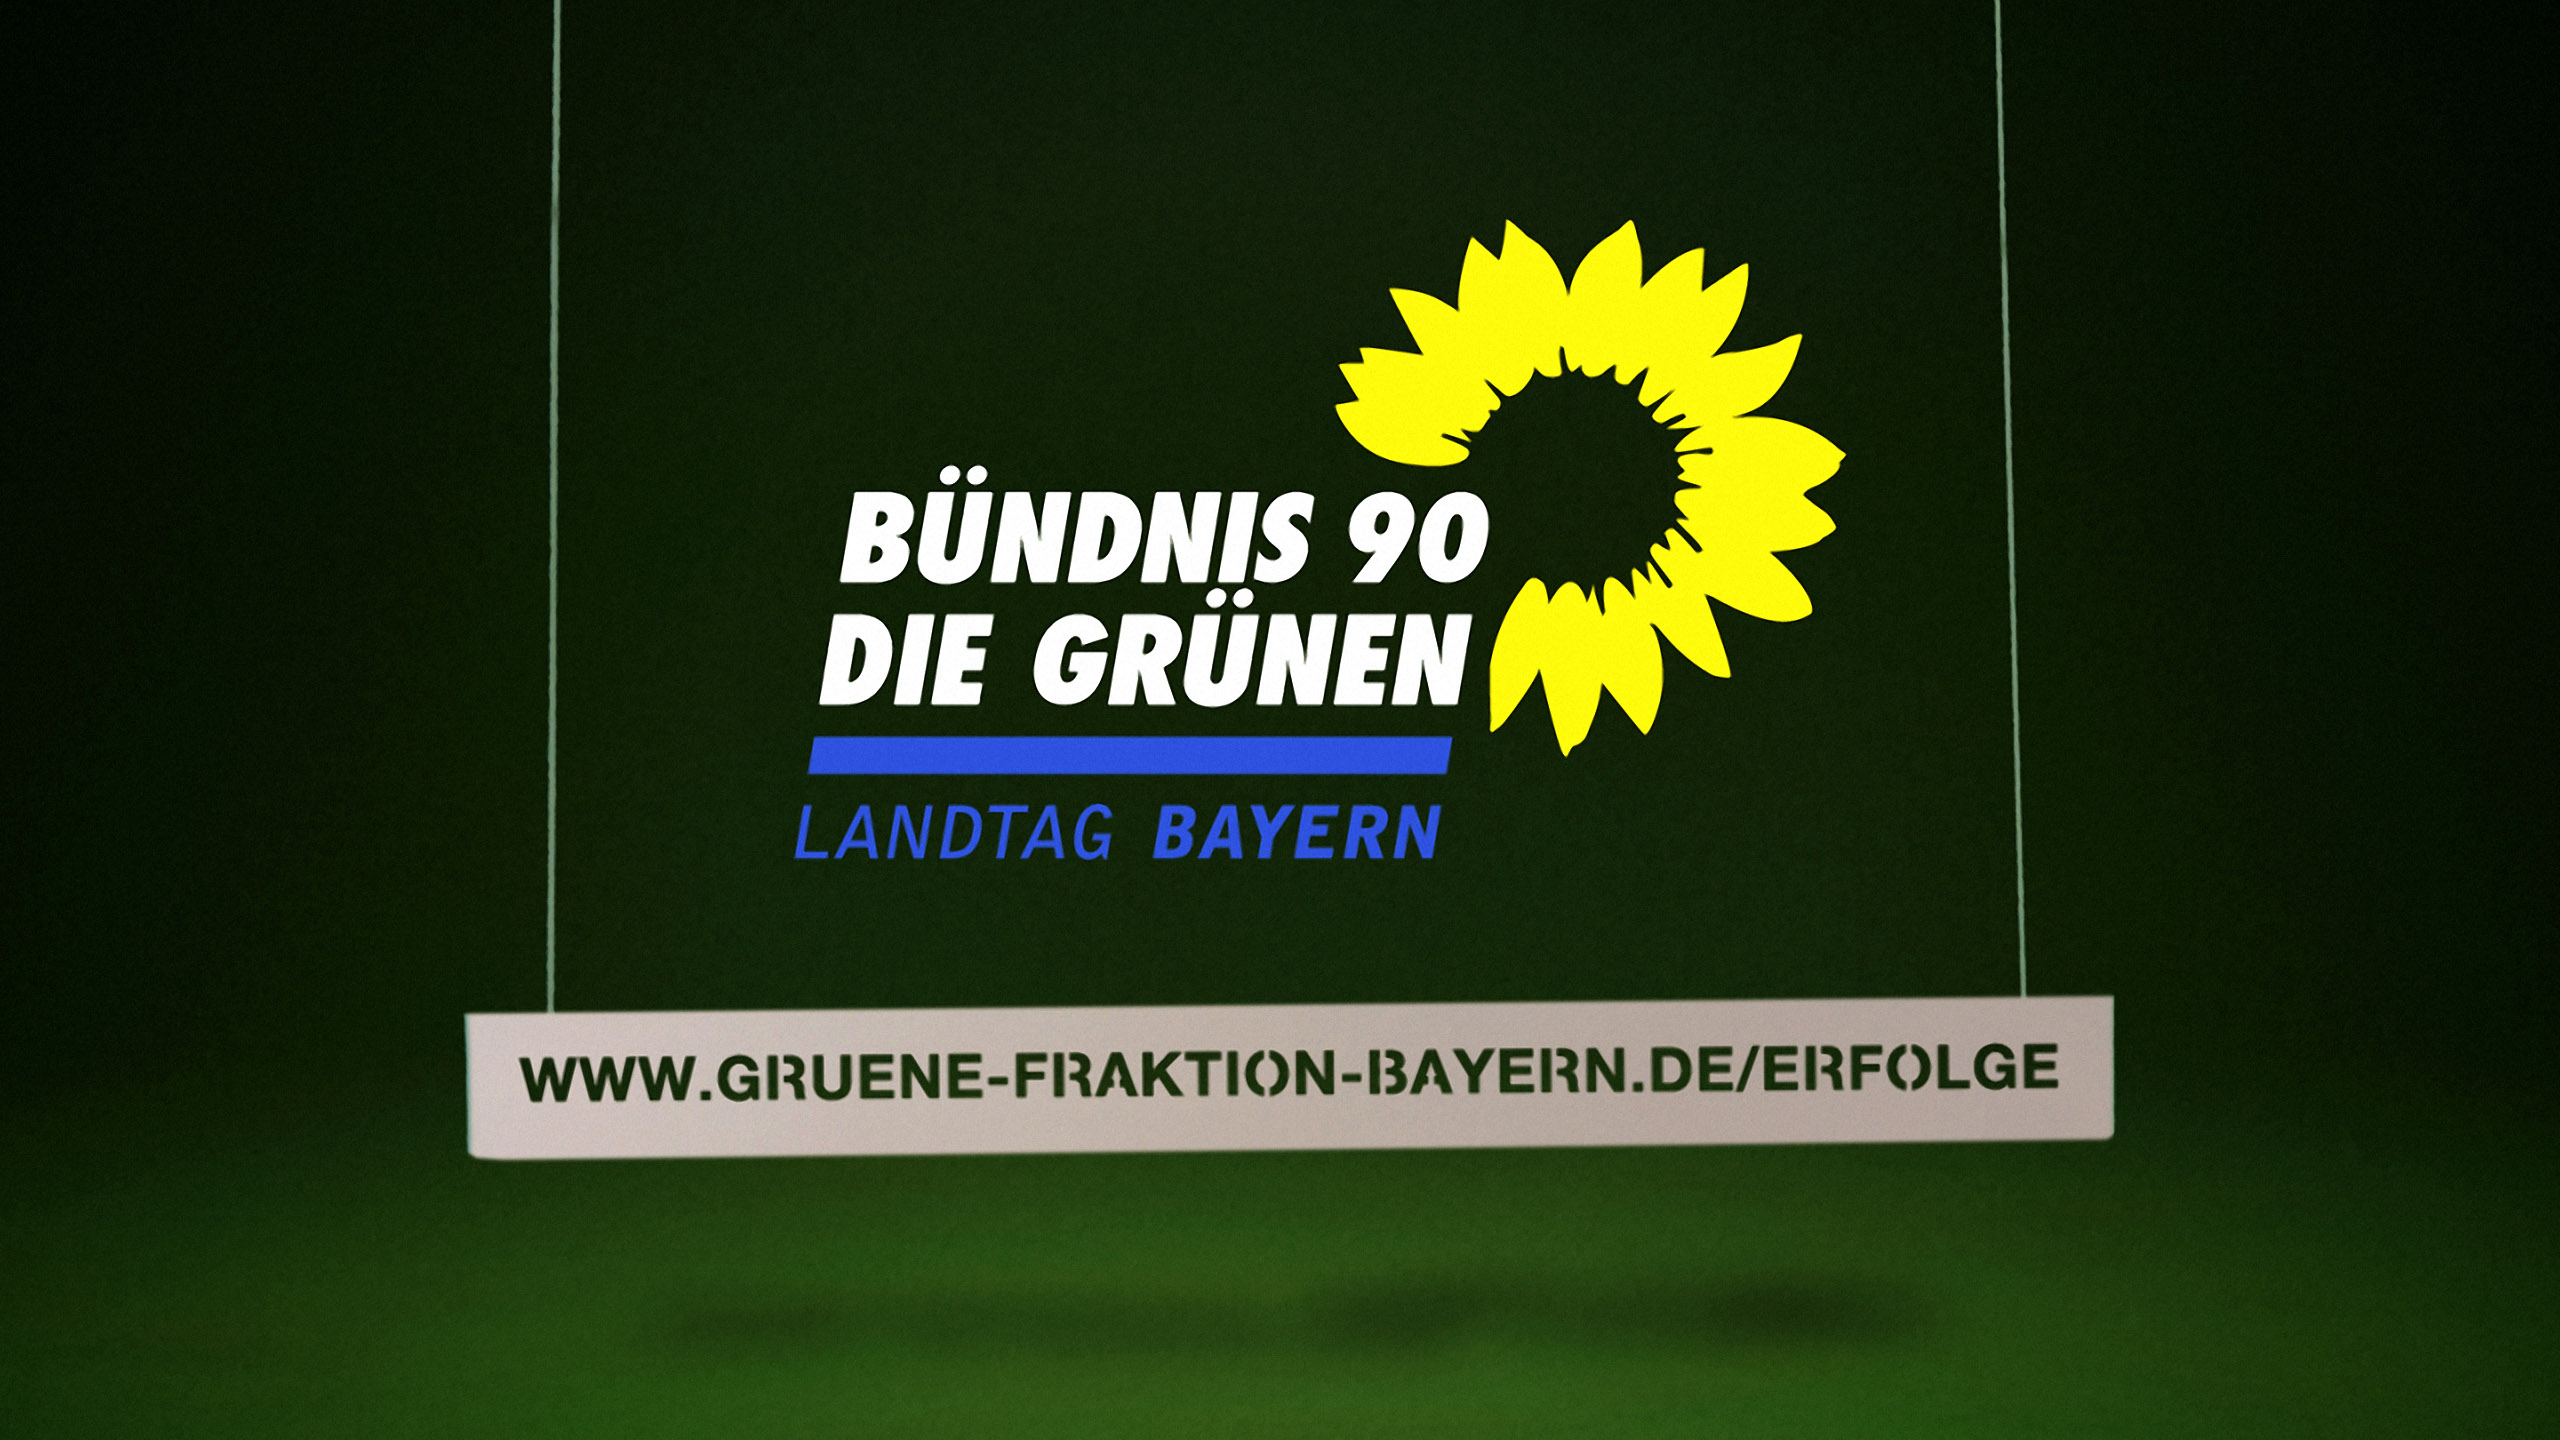 Bündnis 90 - Die Grünen